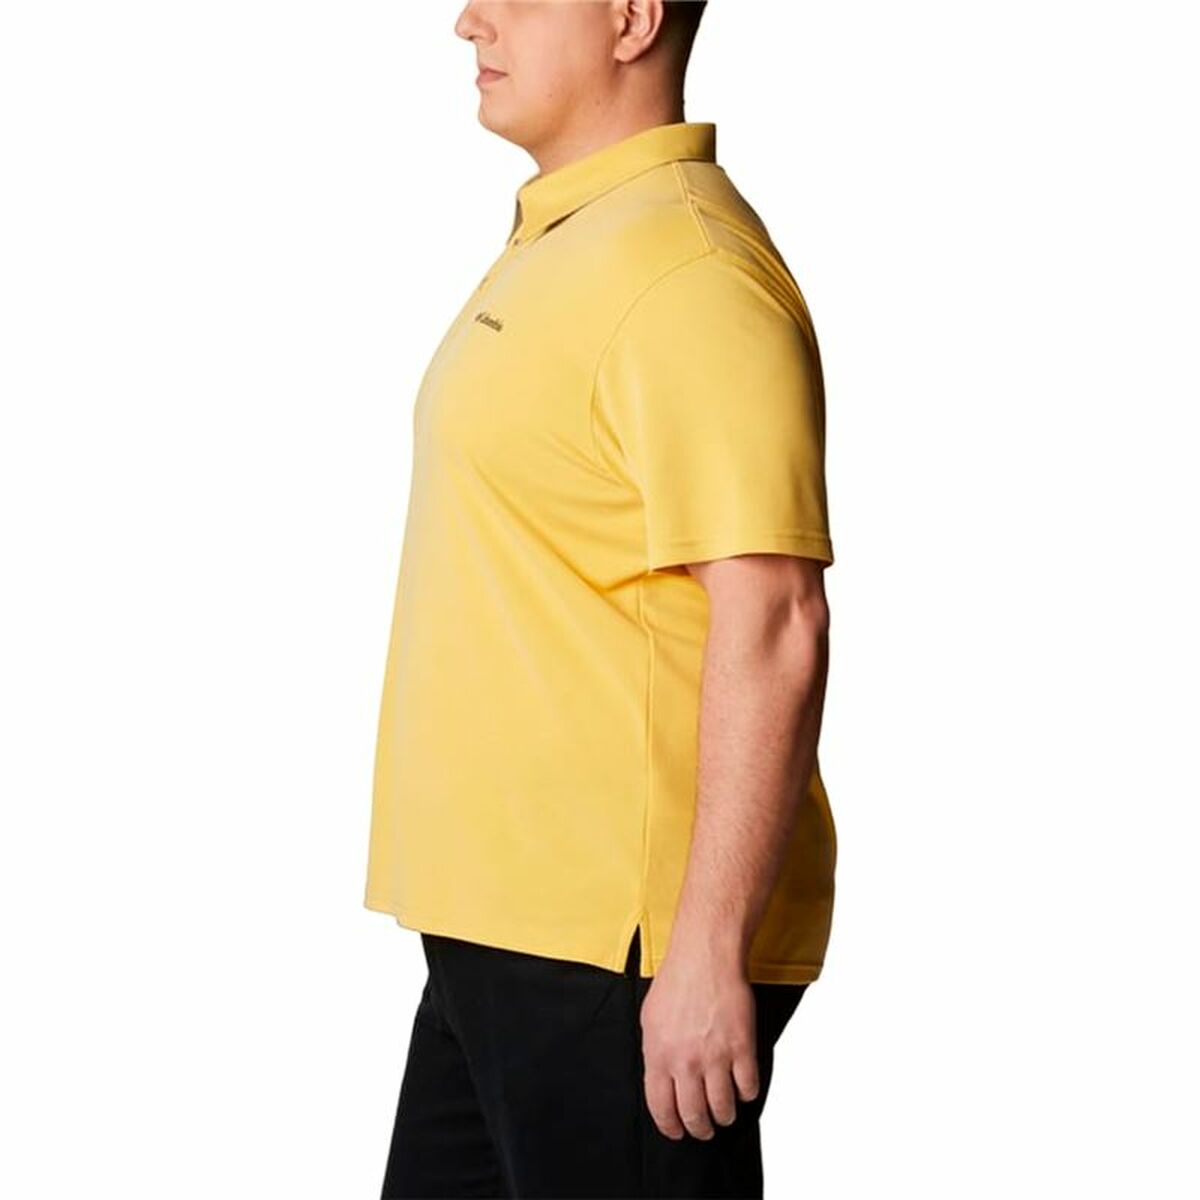 Kaufe Herren Kurzarm-Poloshirt Columbia Nelson Point™ Gelb bei AWK Flagship um € 61.00